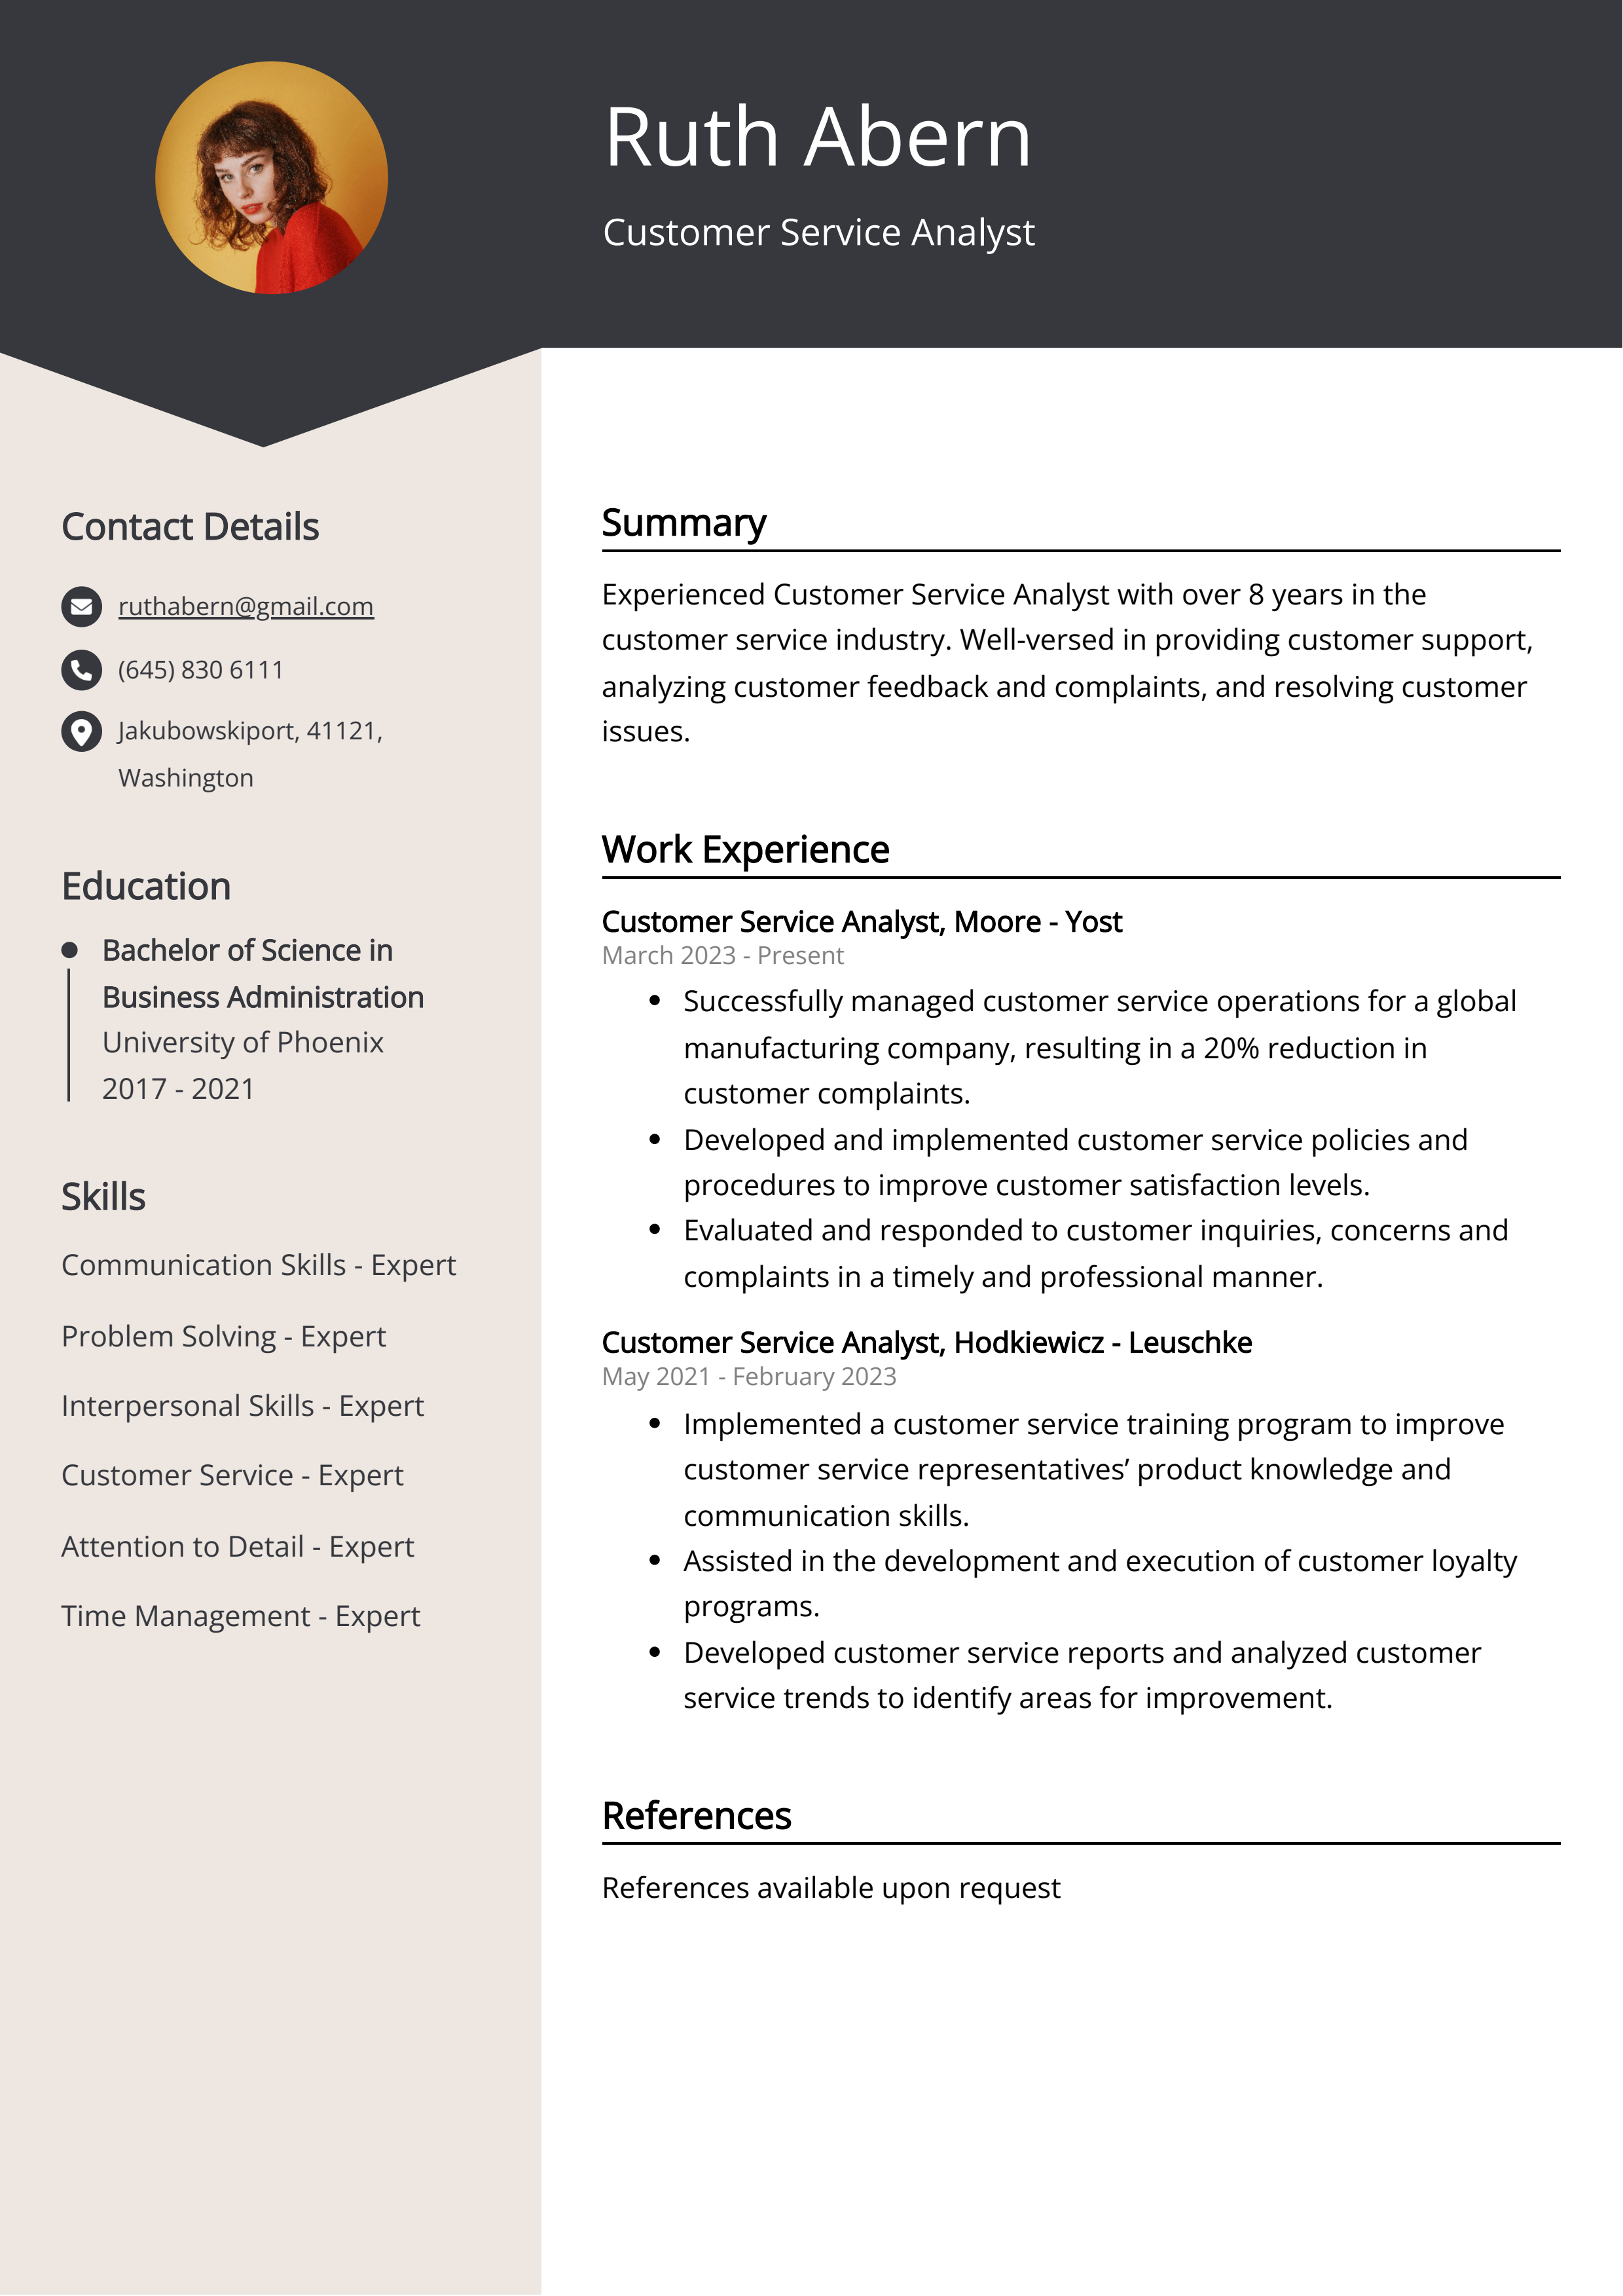 Customer Service Analyst CV Example